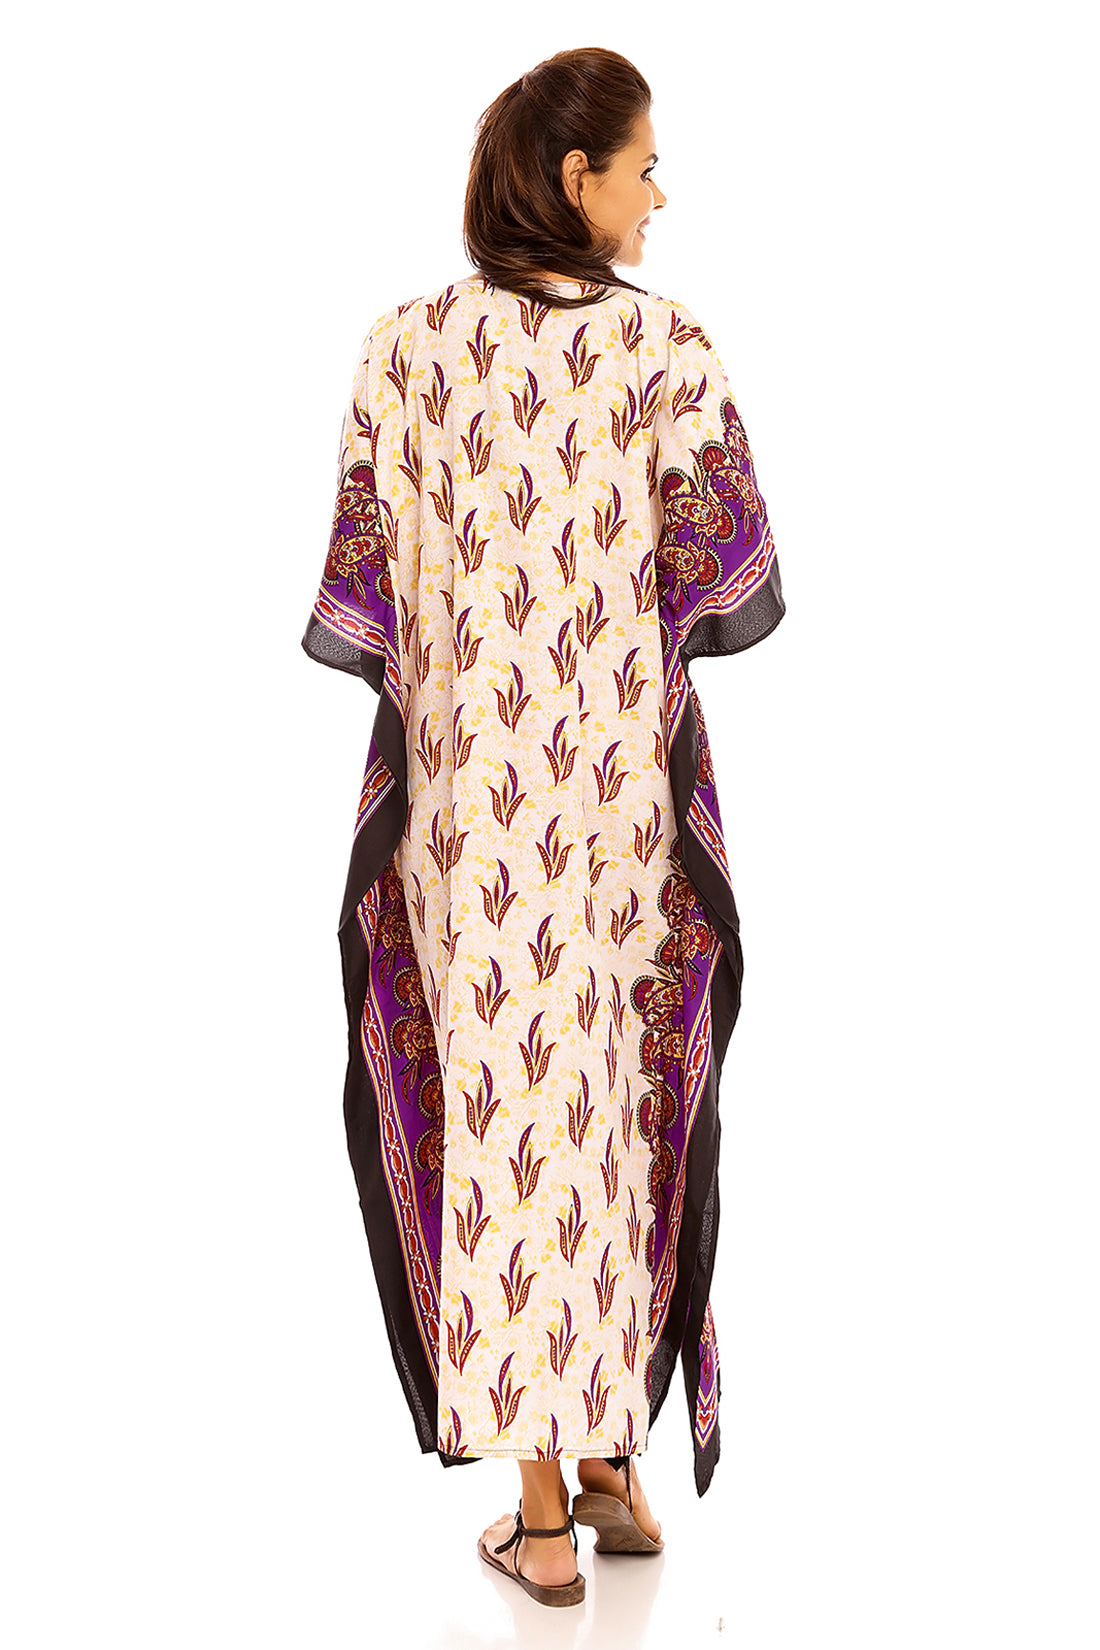 Ladies Tribal Full Length Maxi Kaftan Dress in Purple